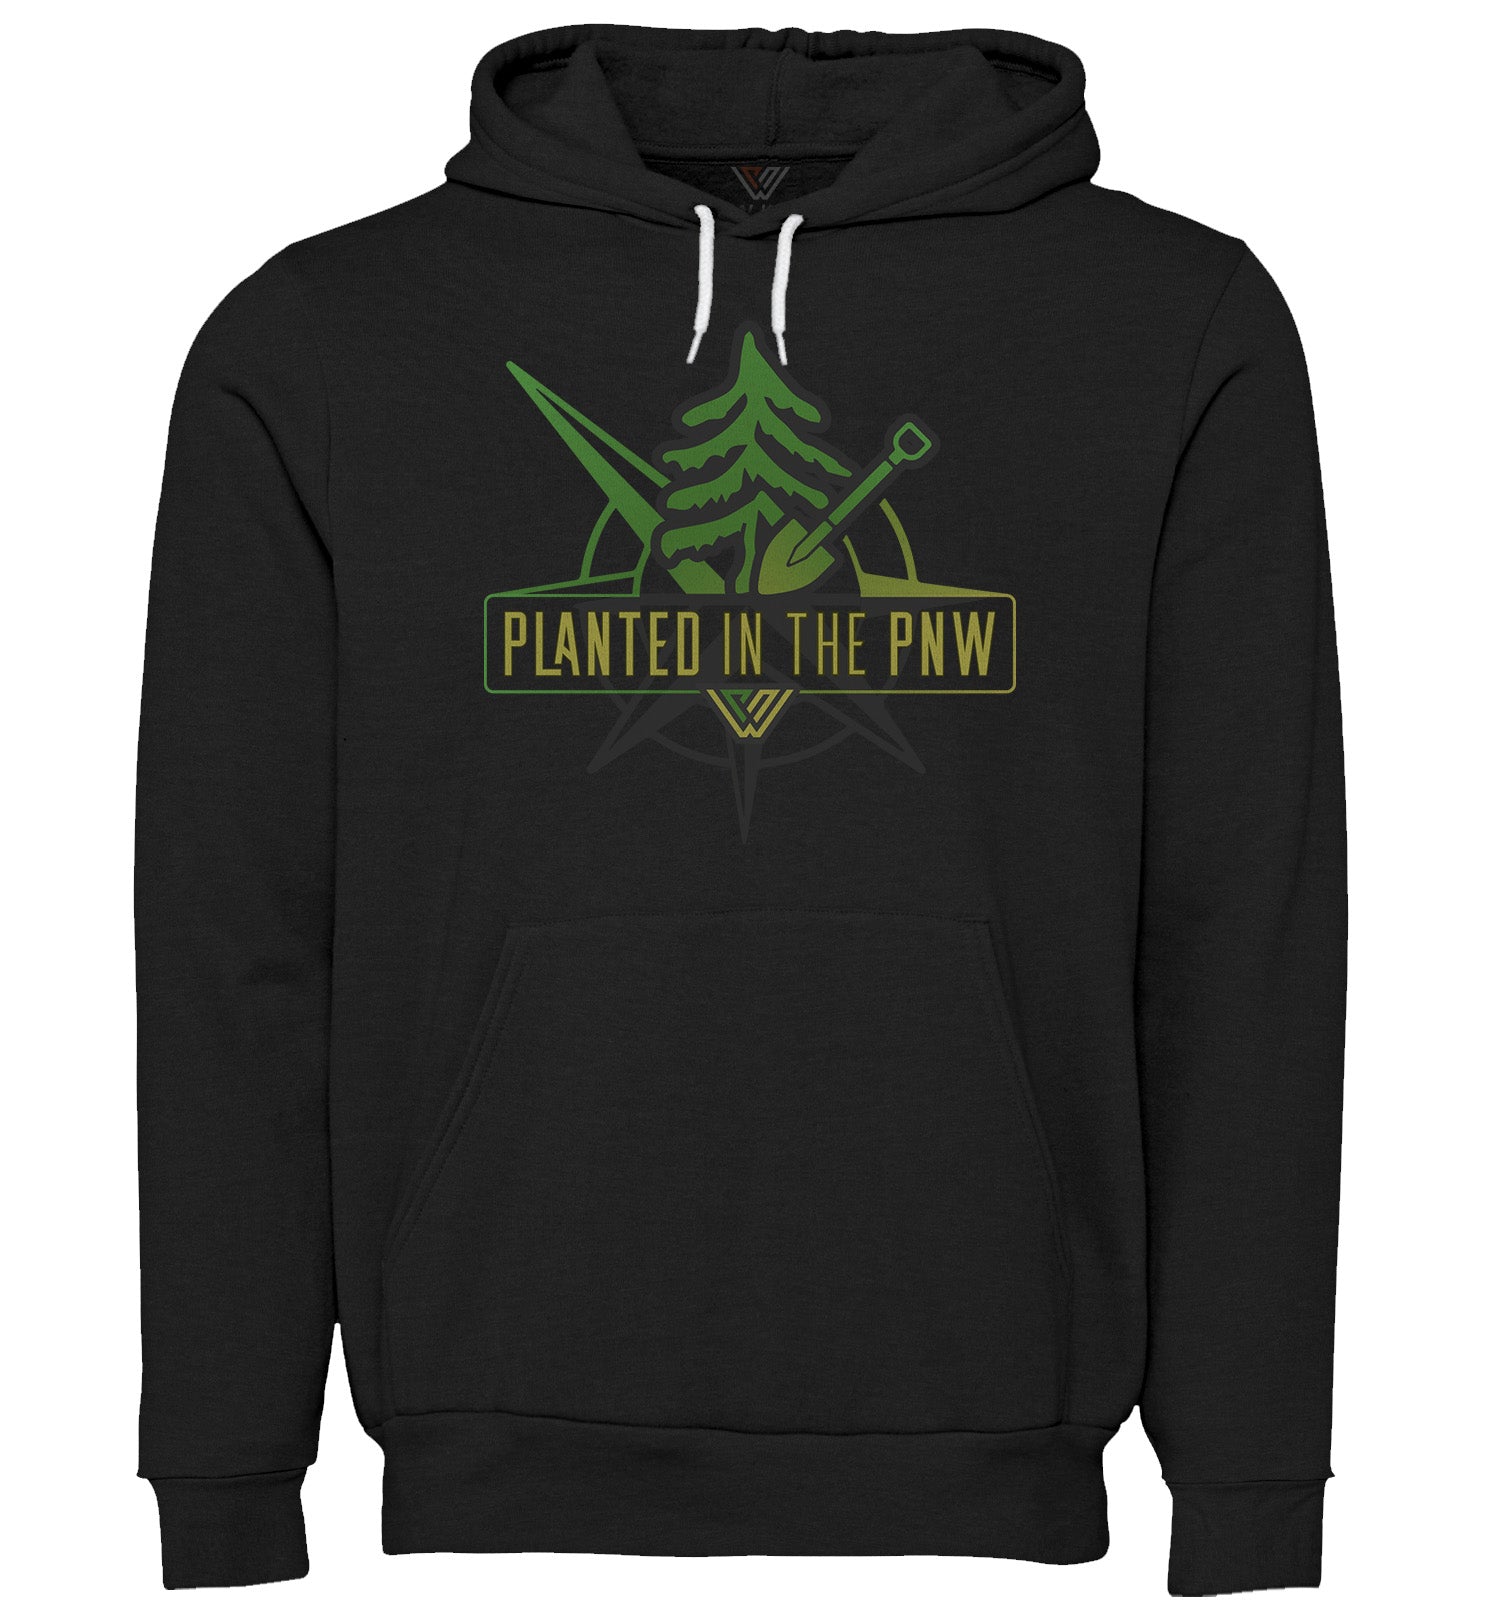 PNW Sweatshirt - Planted in the PNW - Pullover Hoodie - Front - Dark Grey Heather